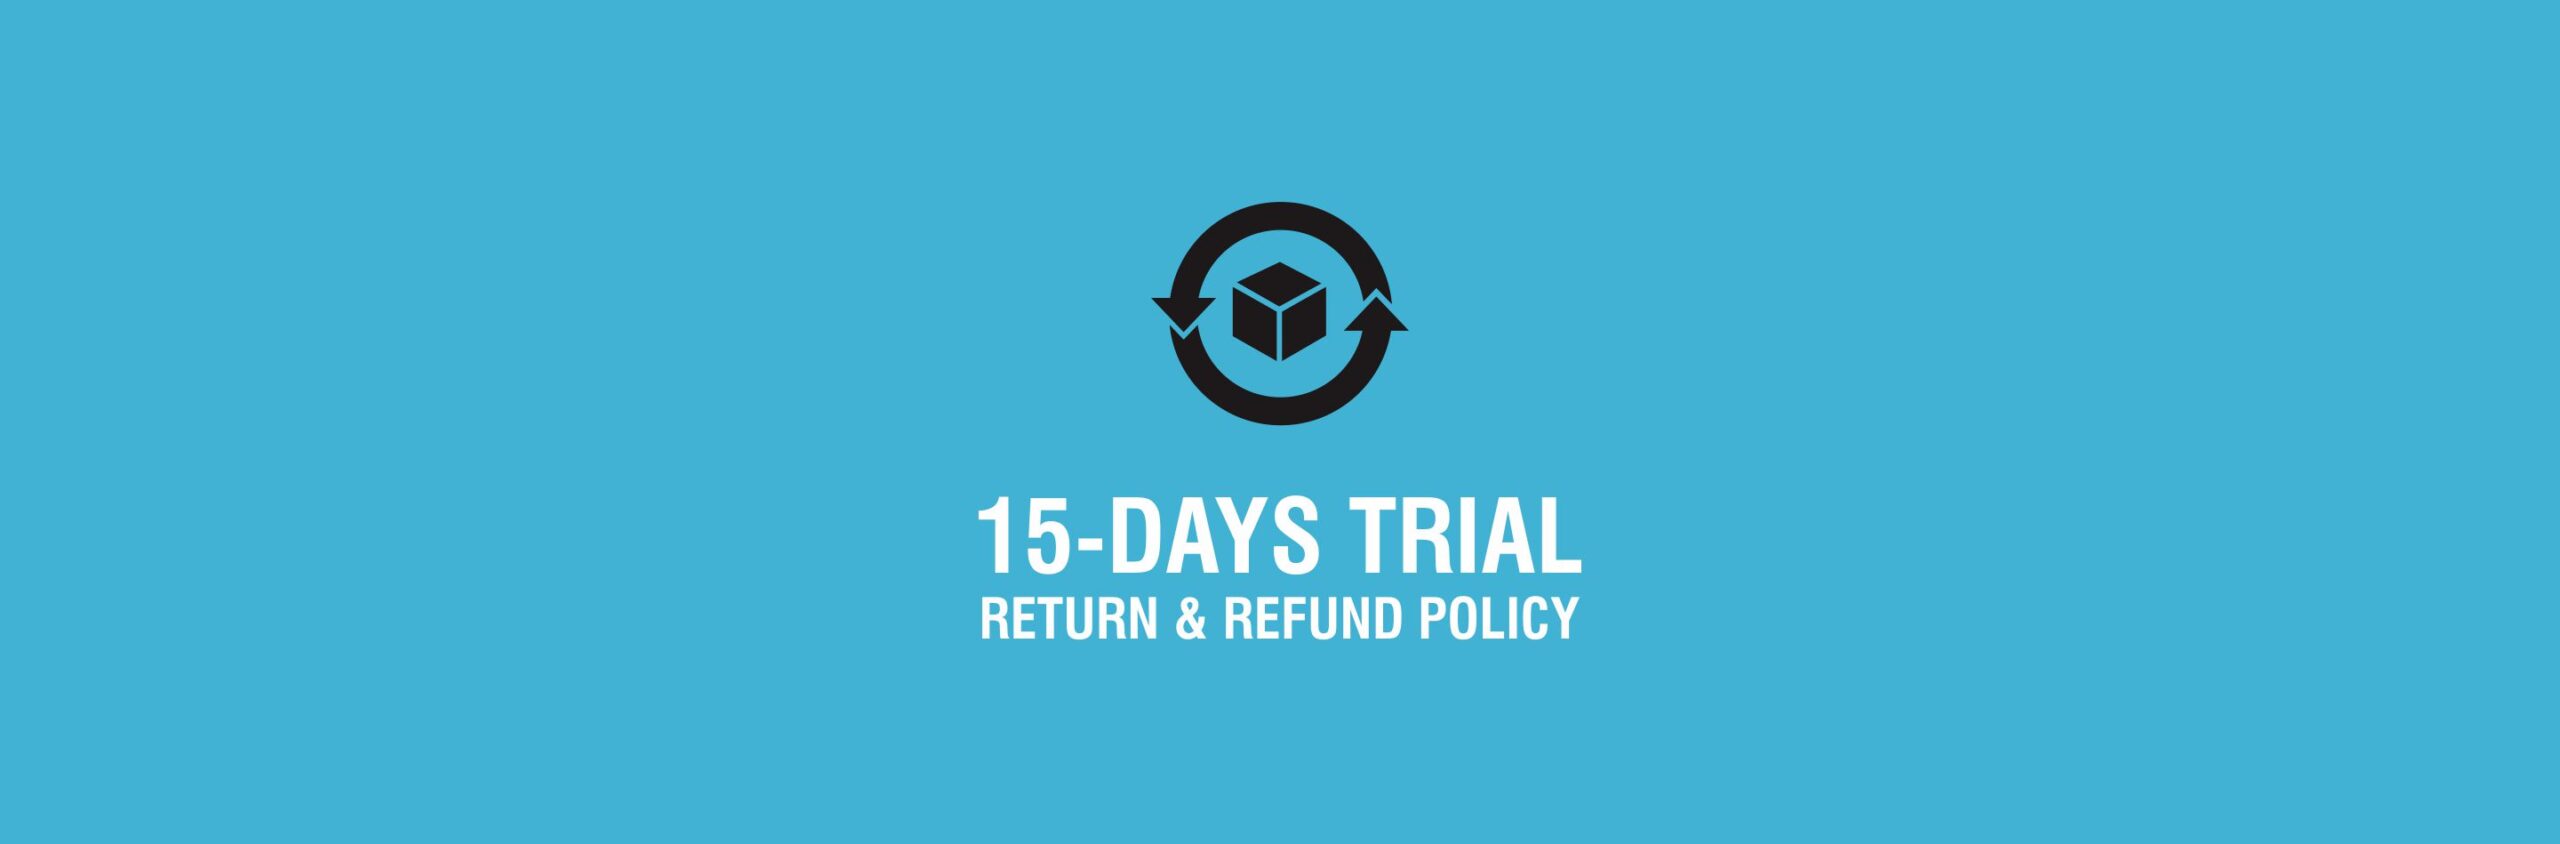 GlassOuse 15-Days Trial - Return & Refund Policy